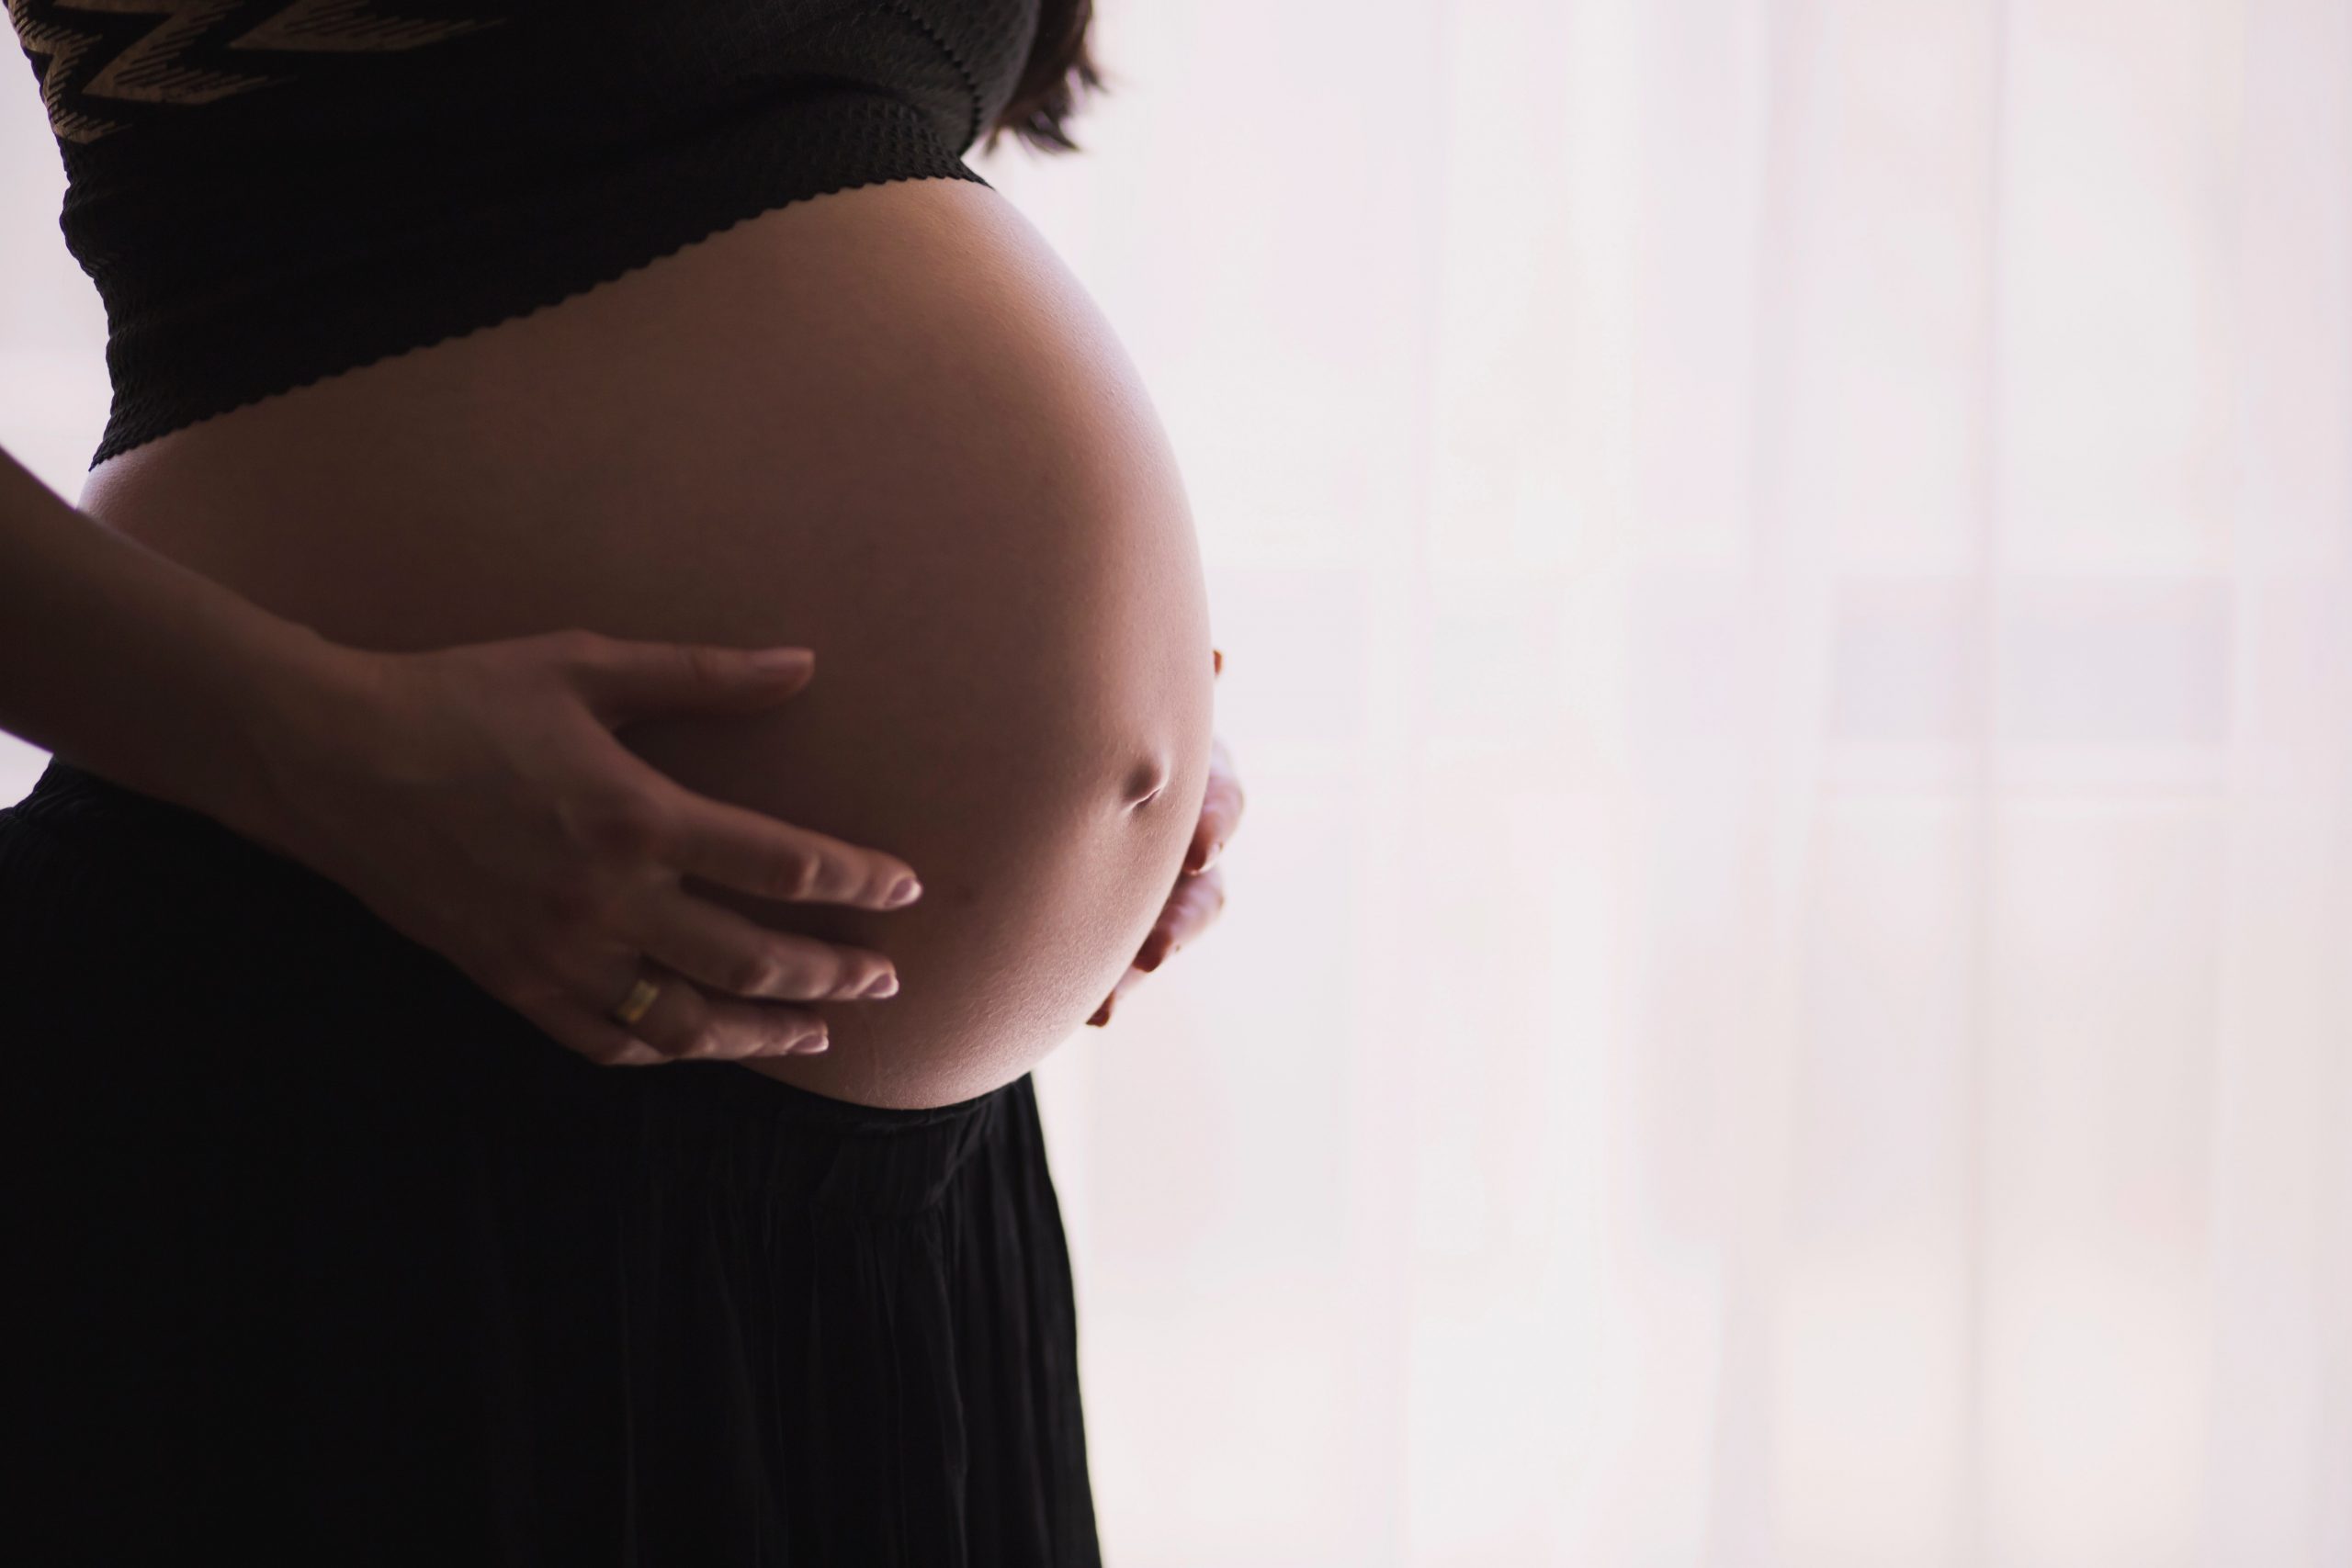 femme enceinte. Crédit photo: Pexels/Freestocksorg